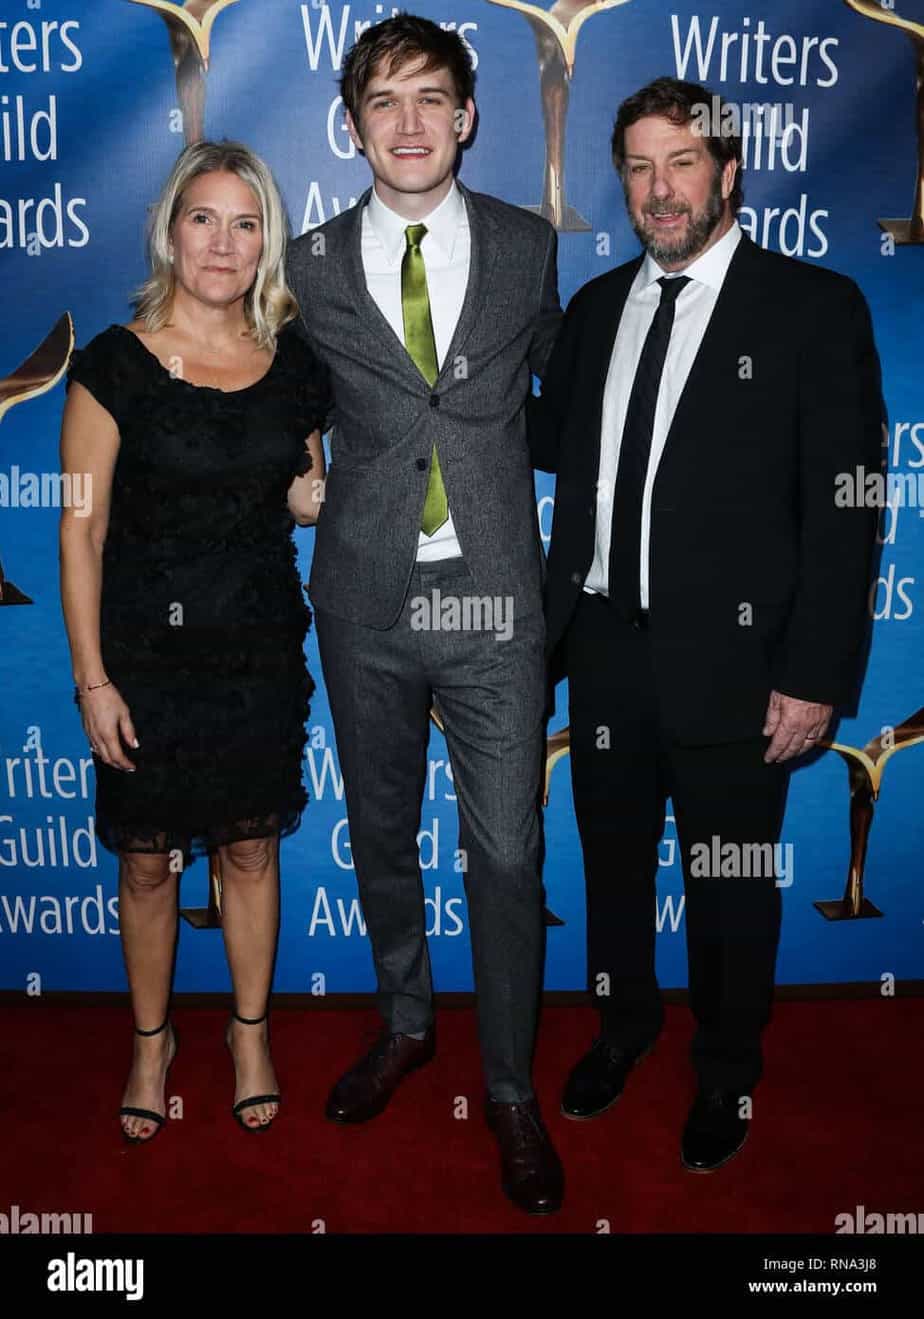 Image of Bo Burnham with his parents 